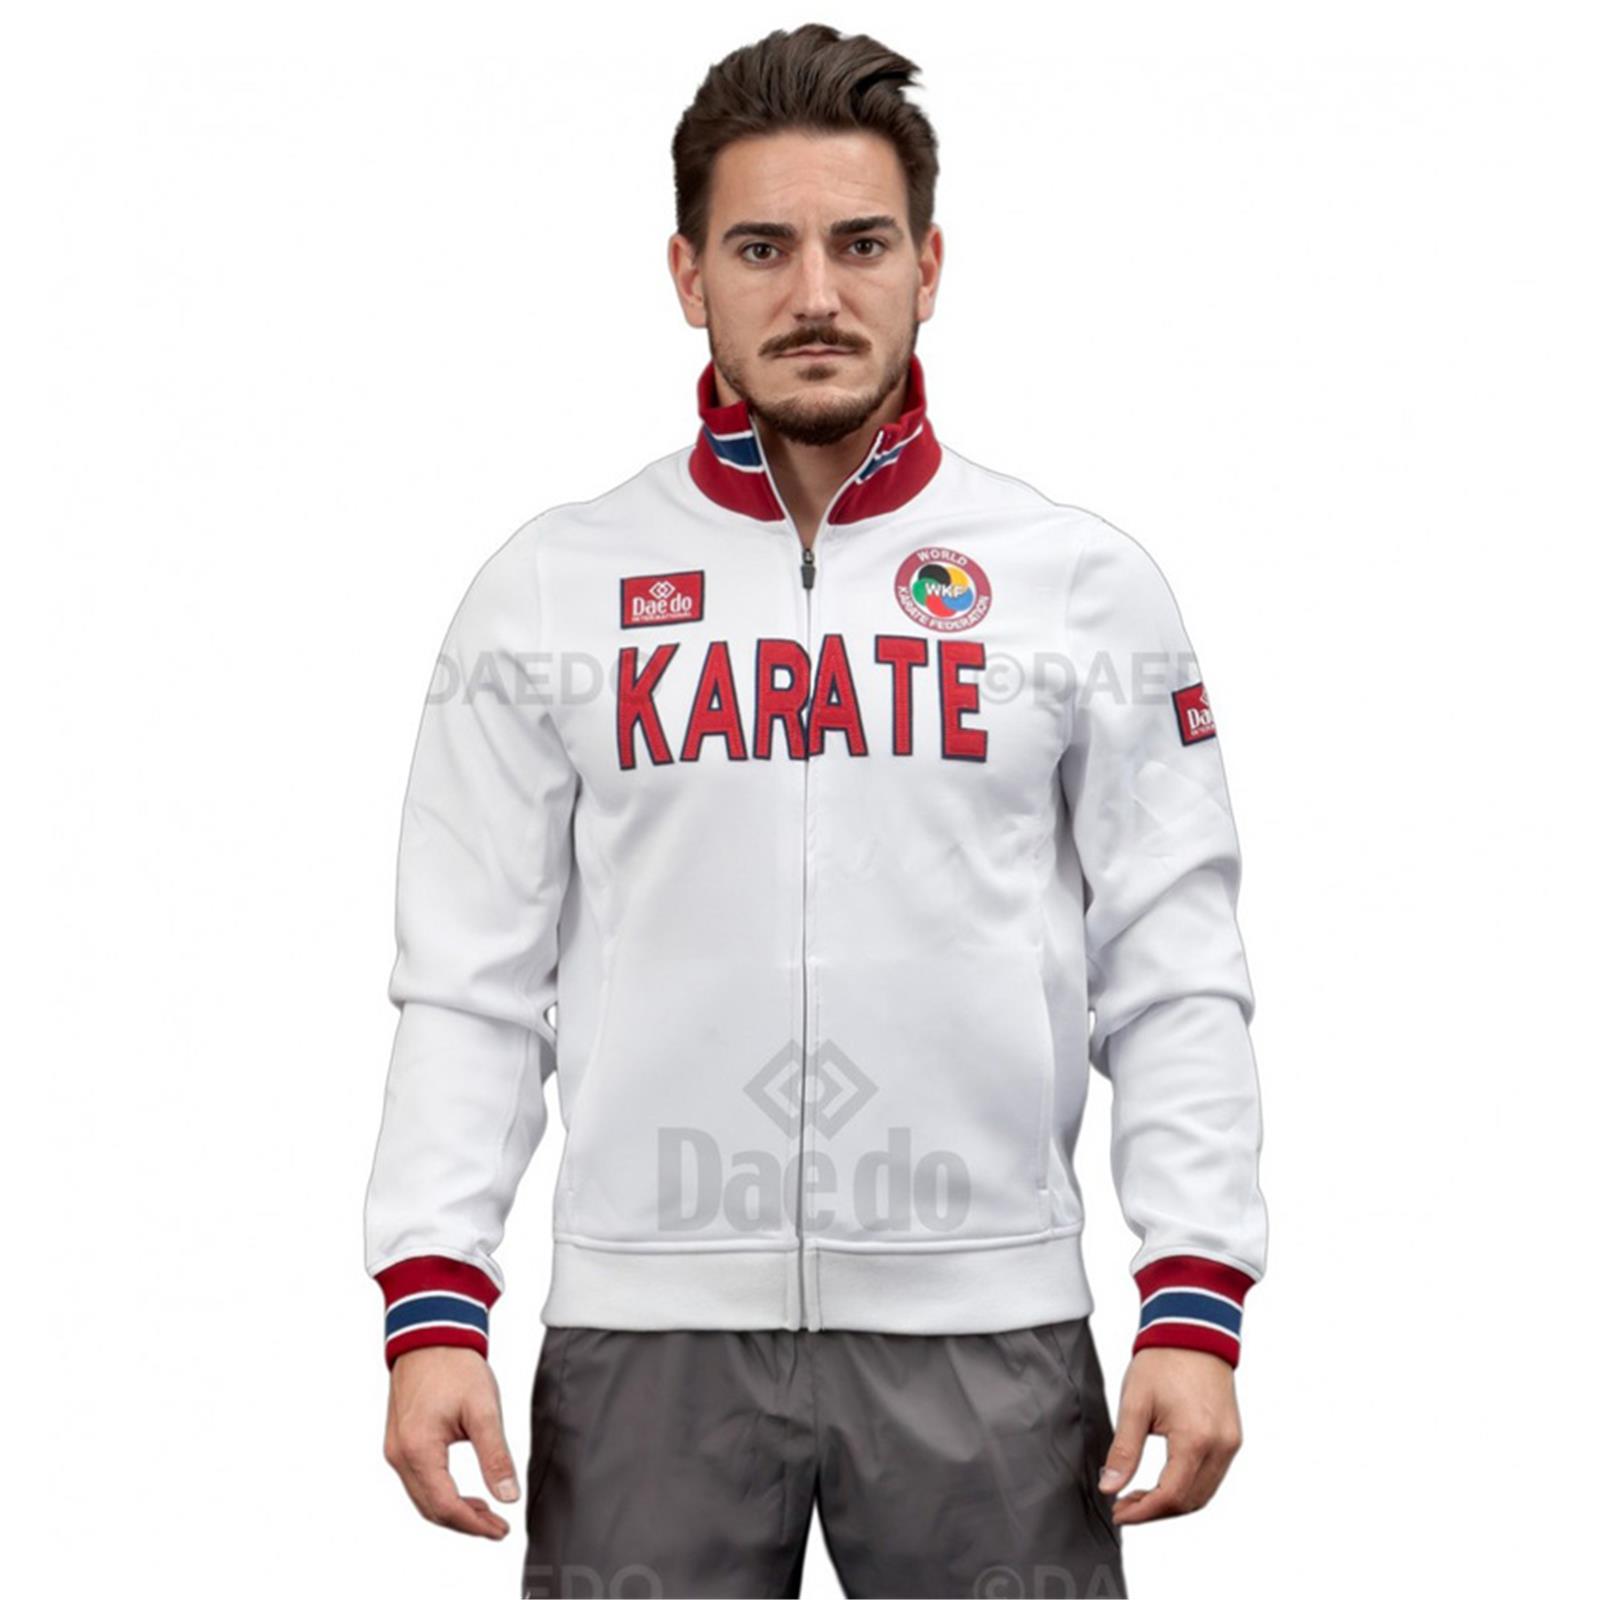 Dae Do Felpa Sportiva Karate slim jacket bianca (L - BIANCO)